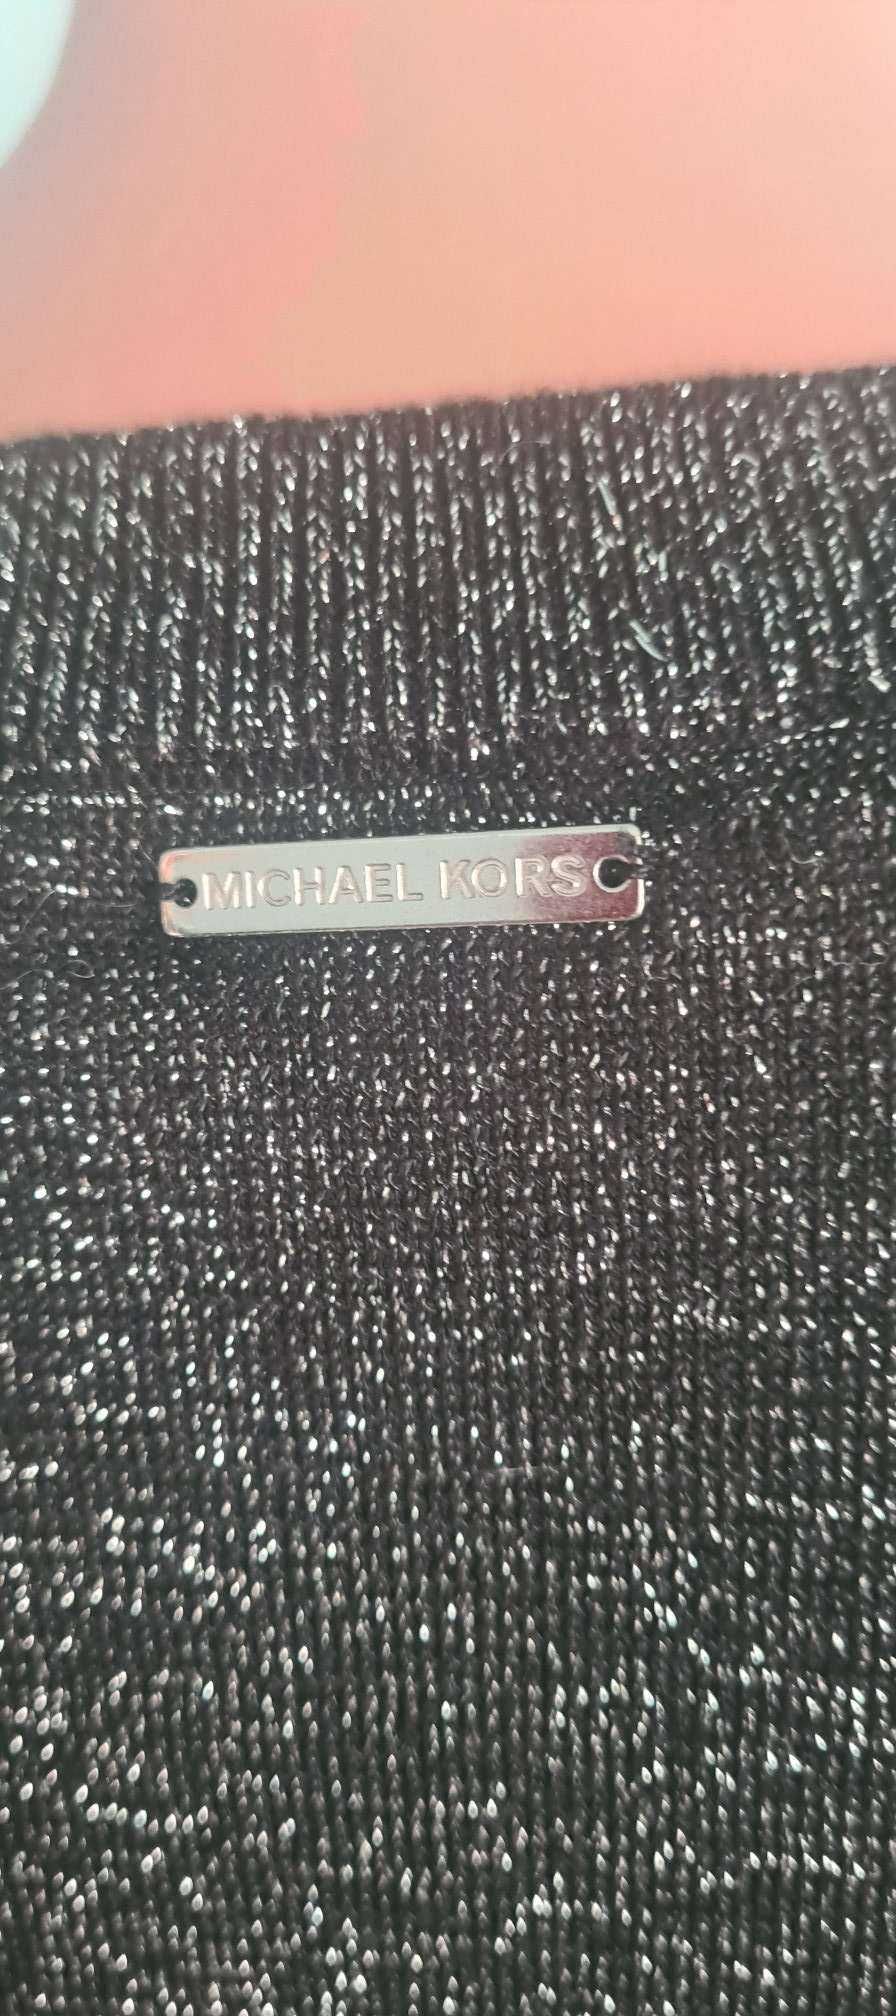 Продам свитер Michael Kors размер М, цена 2 000грн